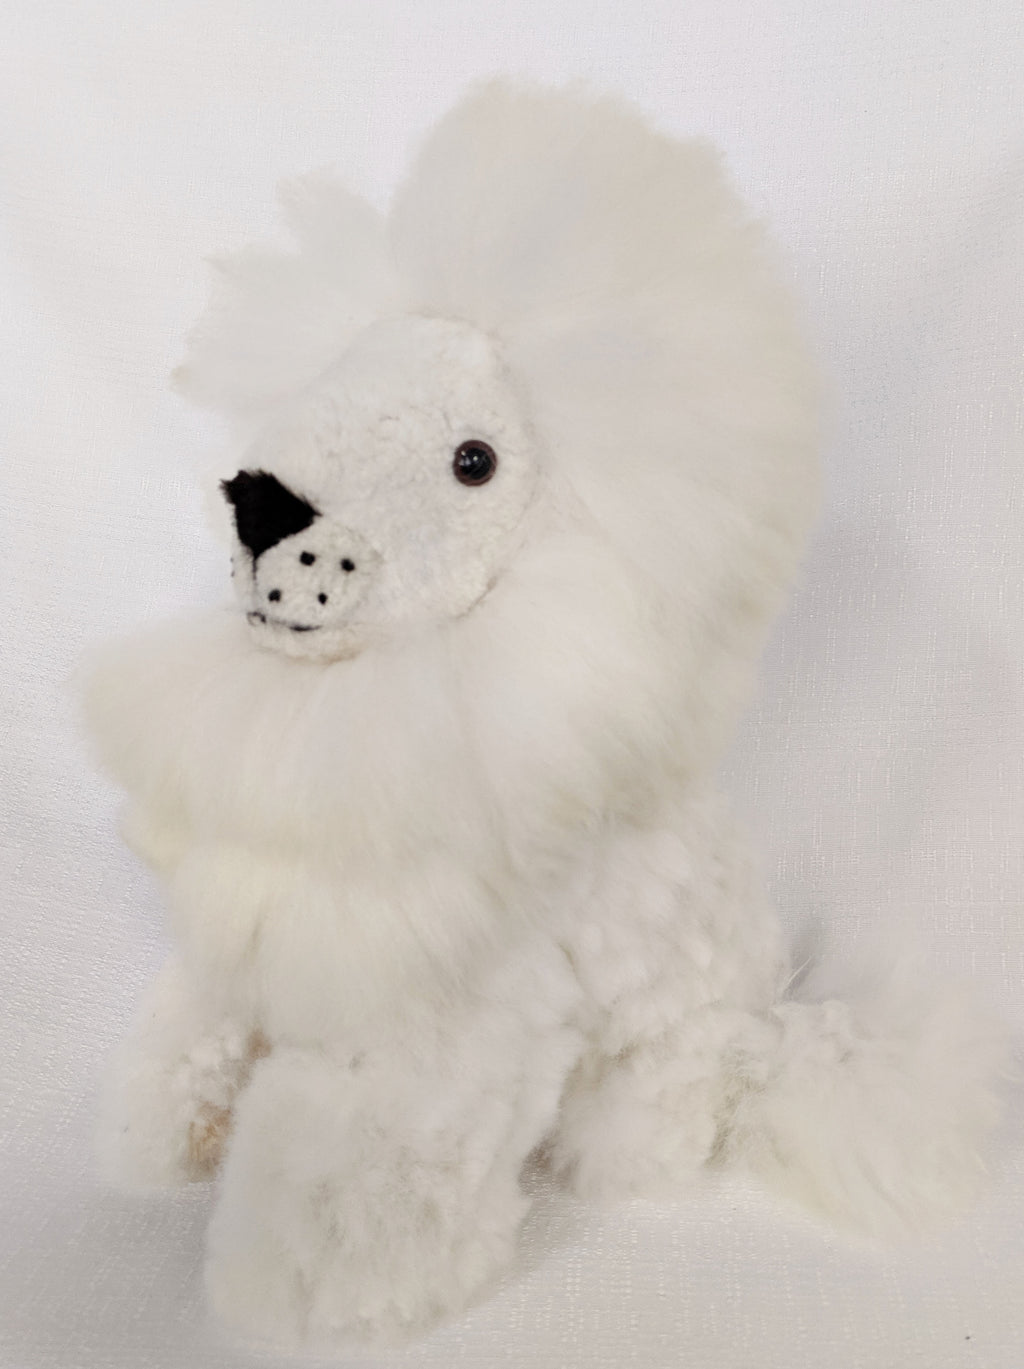 white lion stuffed animal